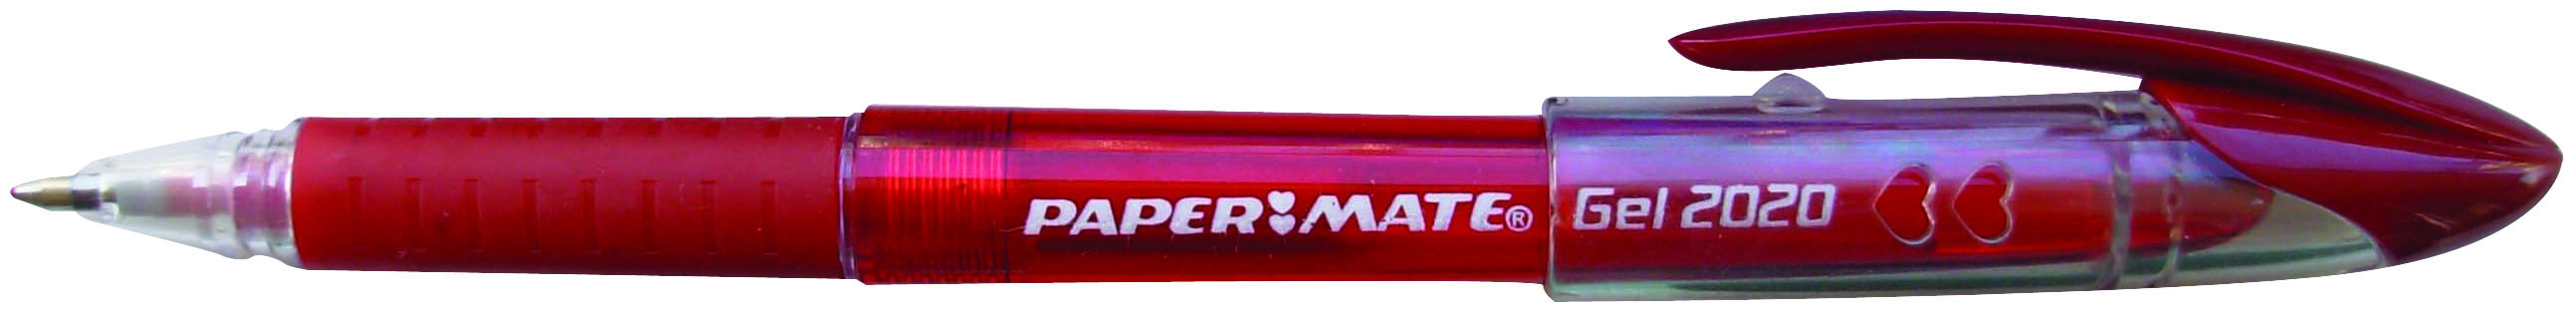 Papemate Gel 2020 red pen 0.5mm